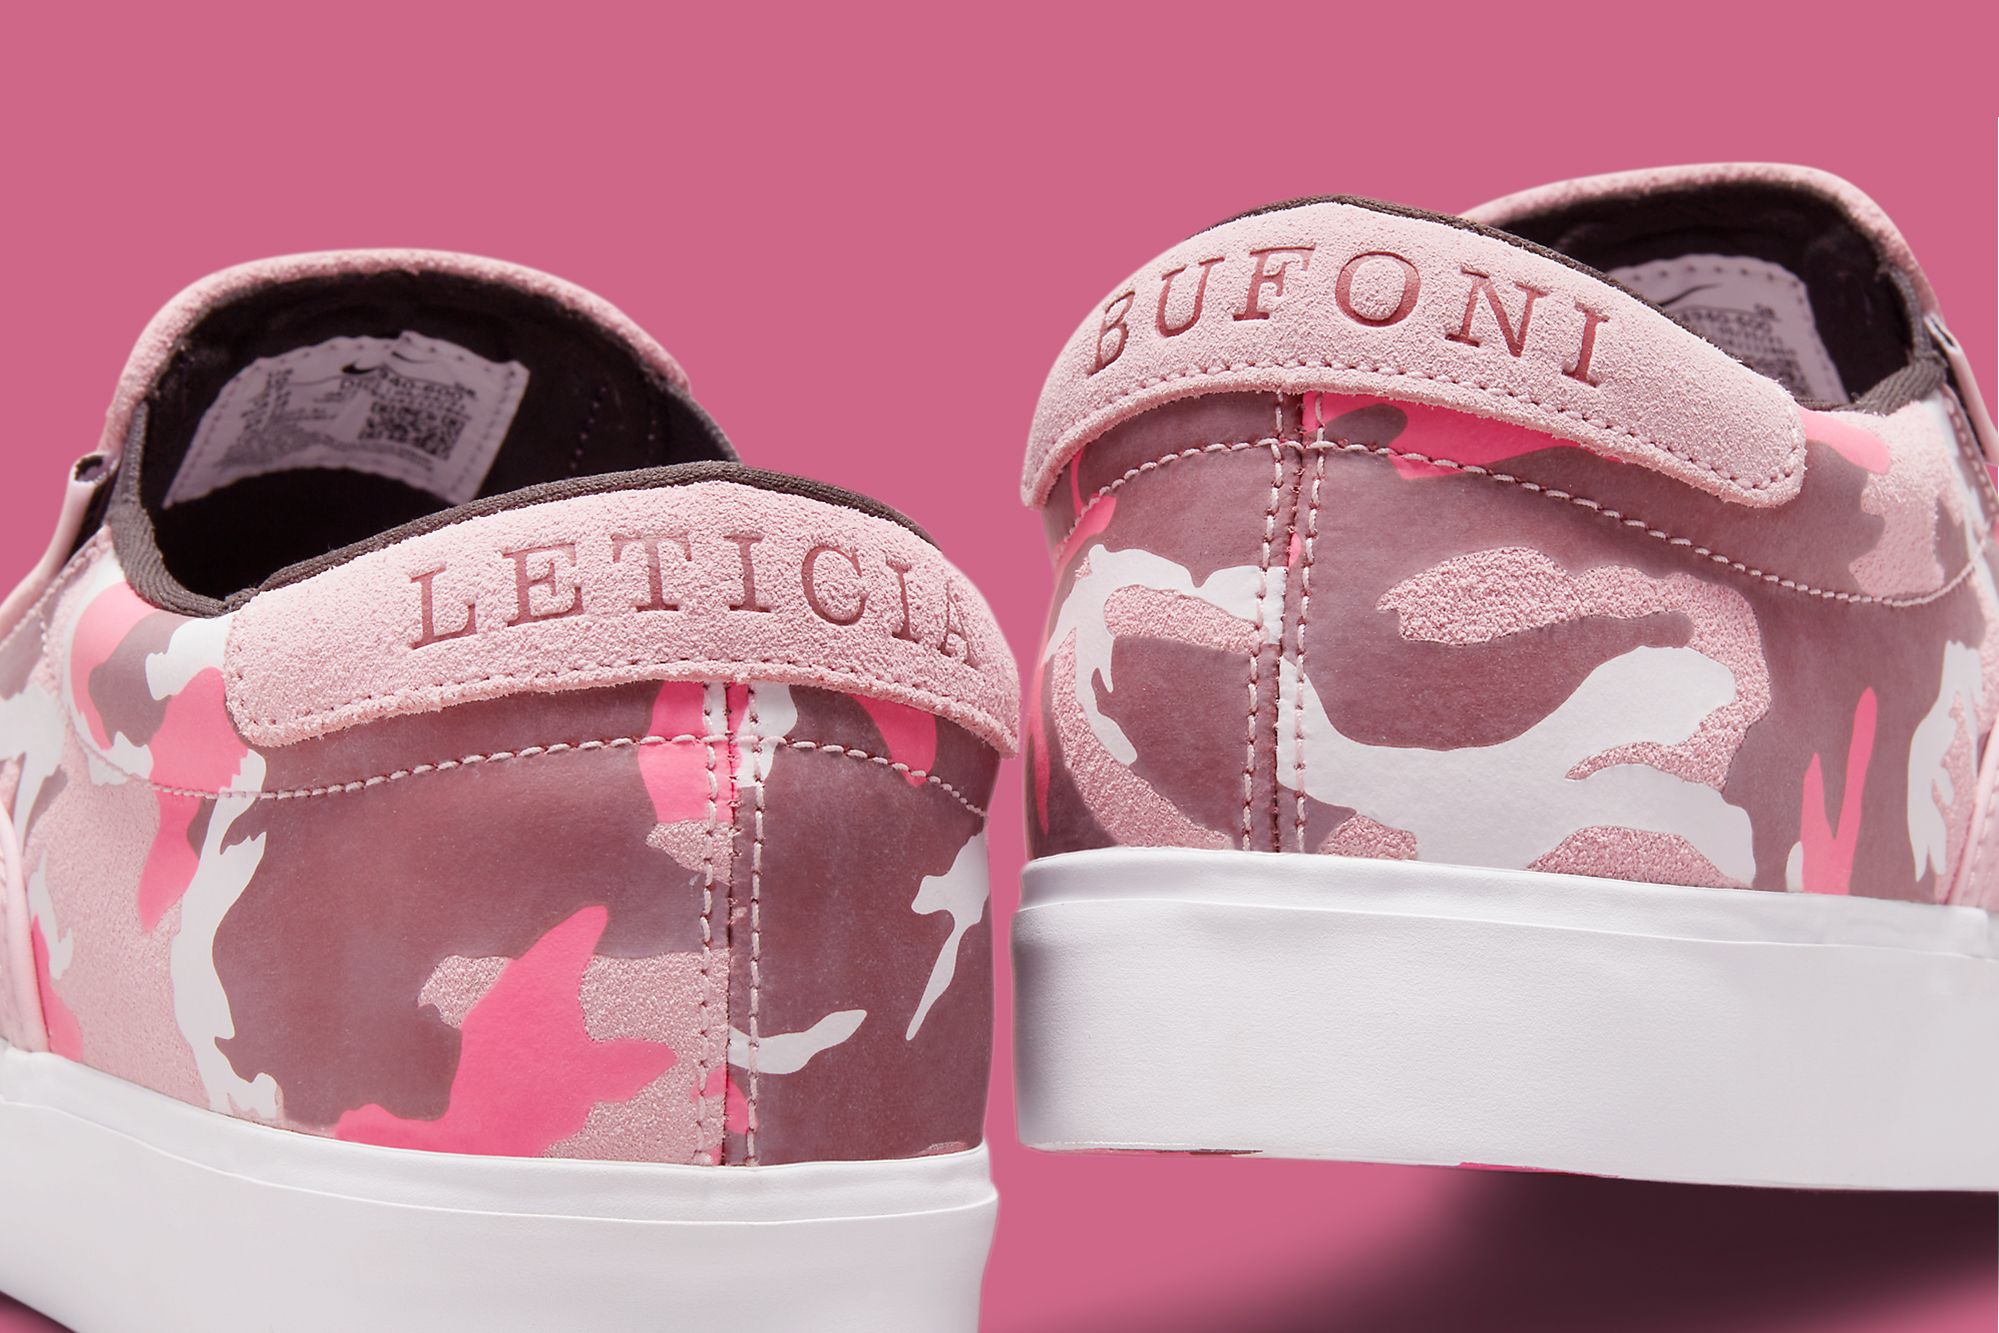 Release leticia bufoni nike shoes Info: Leticia Bufoni x Nike SB Zoom Verona Slip Pink Camo